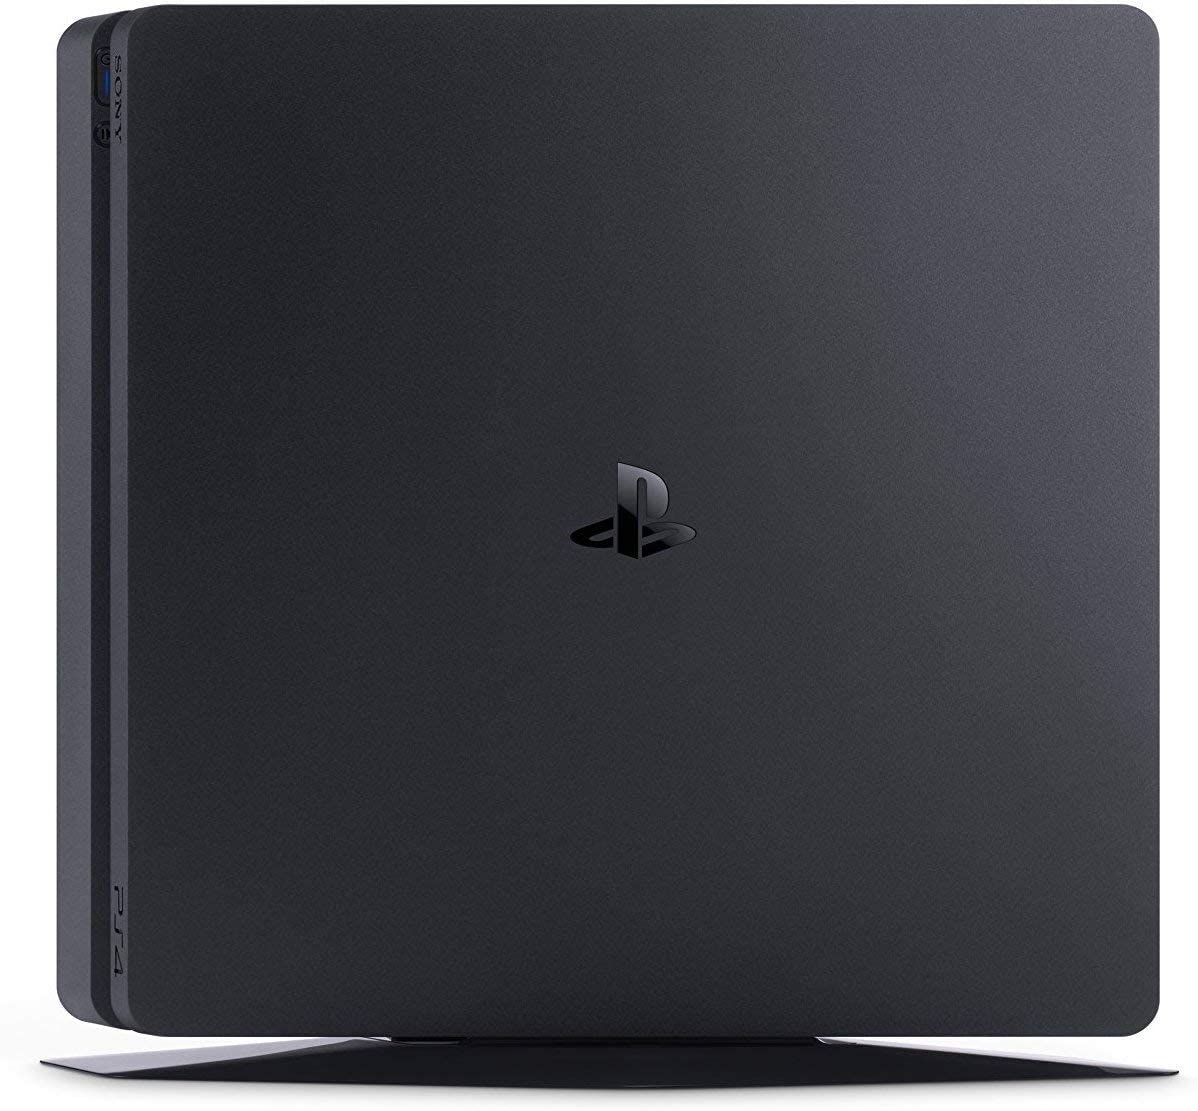 Newest Playstation 4 1TB Slim PS4 Gaming Console, Wi-Fi 5, Bluetooth 4.0 with U Deal HDMI (Renewed)